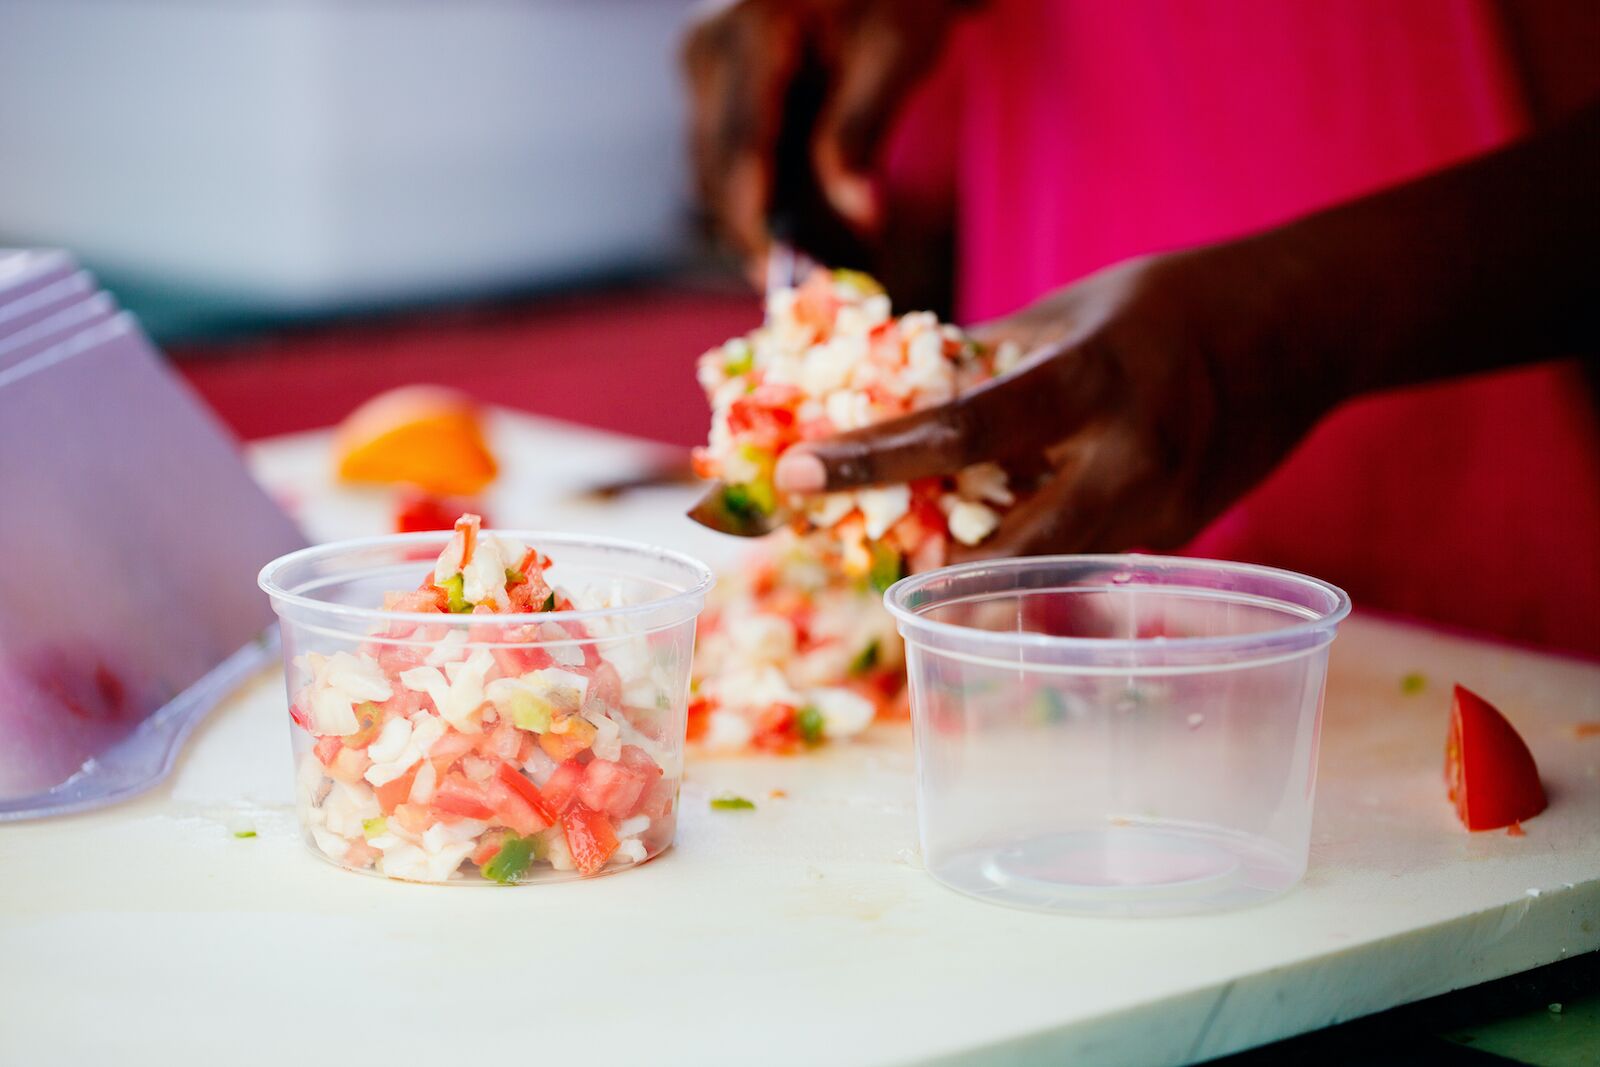 conch-dishes-preparing-conch-salad